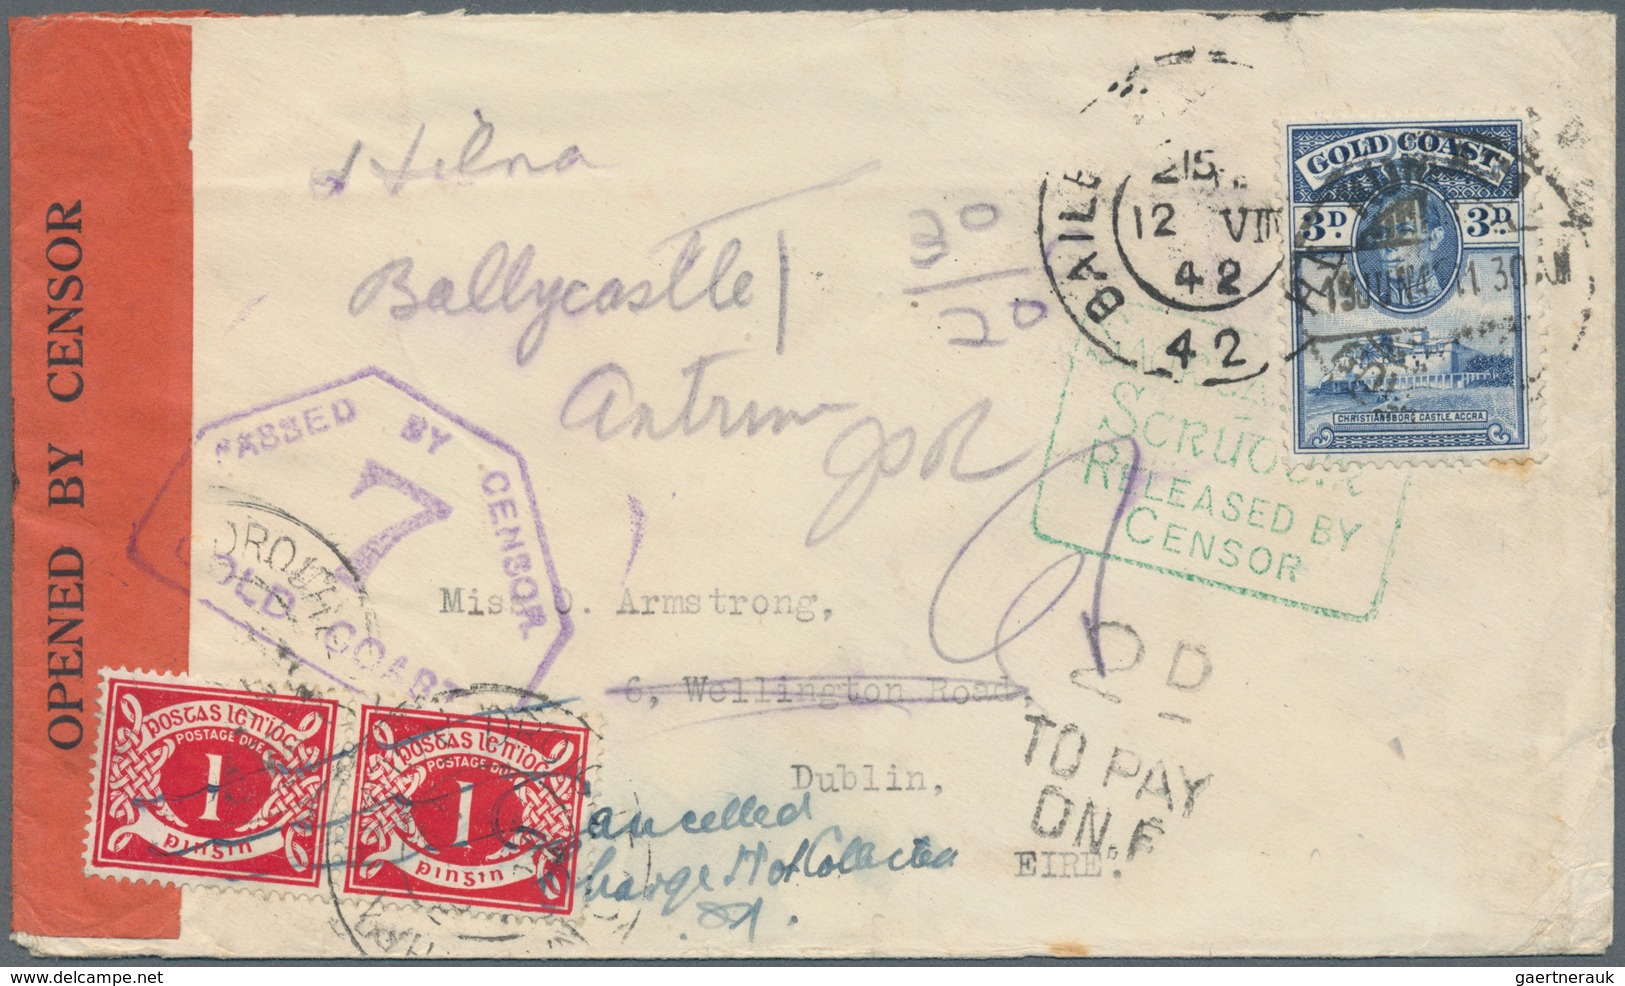 Irland - Portomarken: 1942. Envelope Addressed To Ireland Bearing Gold Coast SG 124, 3d Blue Tied By - Postage Due